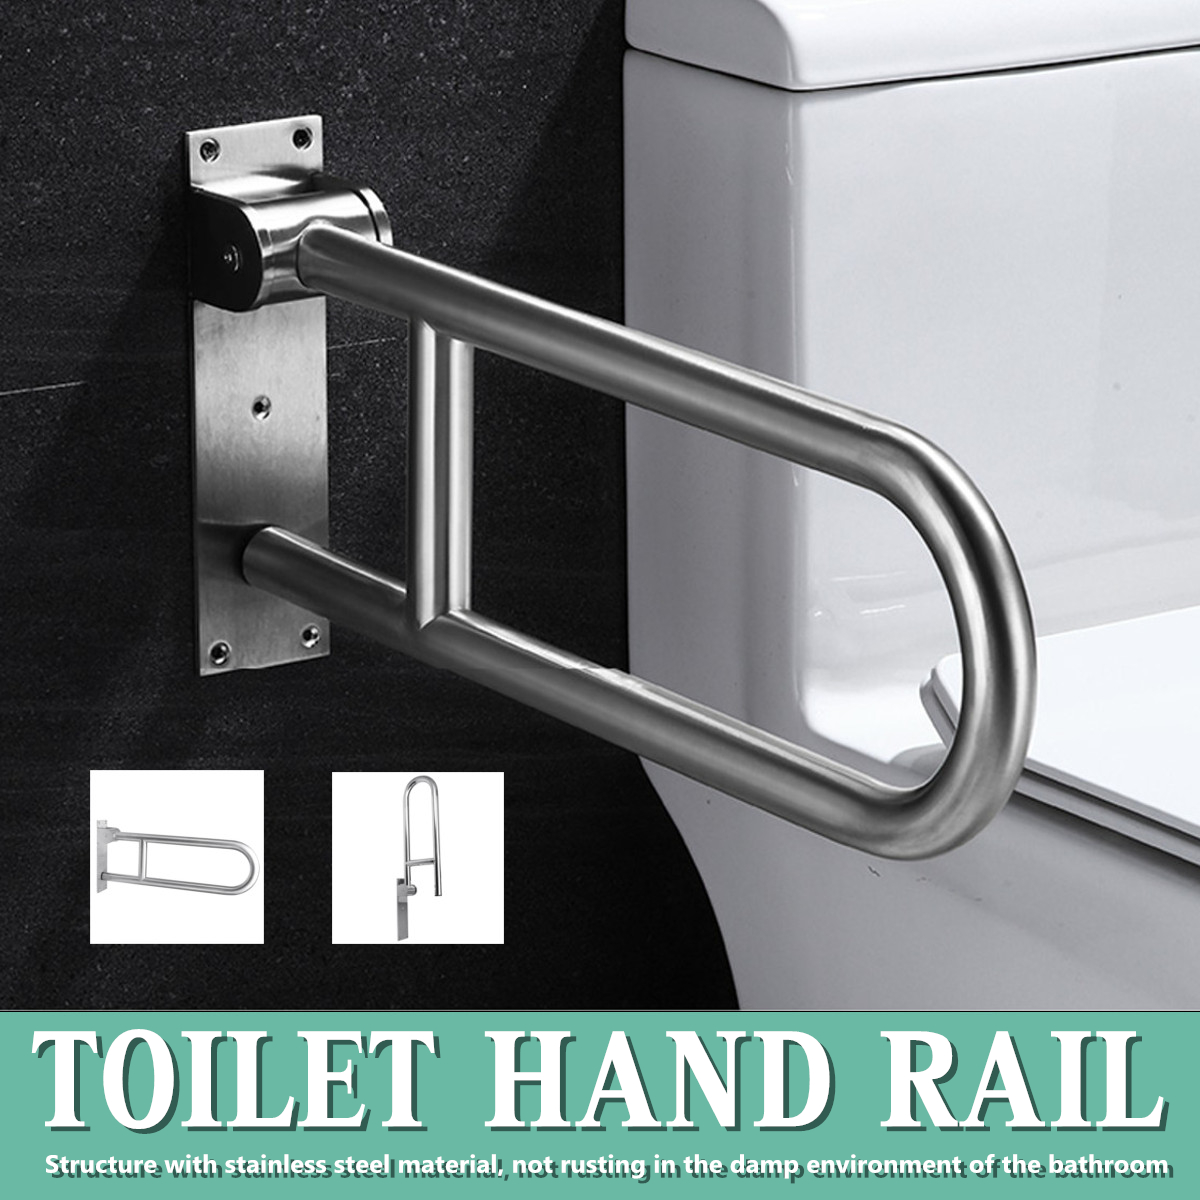 Stainless-Steel-Toilet-Safety-Frame-Rail-Grab-Bar-Handicap-Bathroom-Hand-Grips-1650108-1